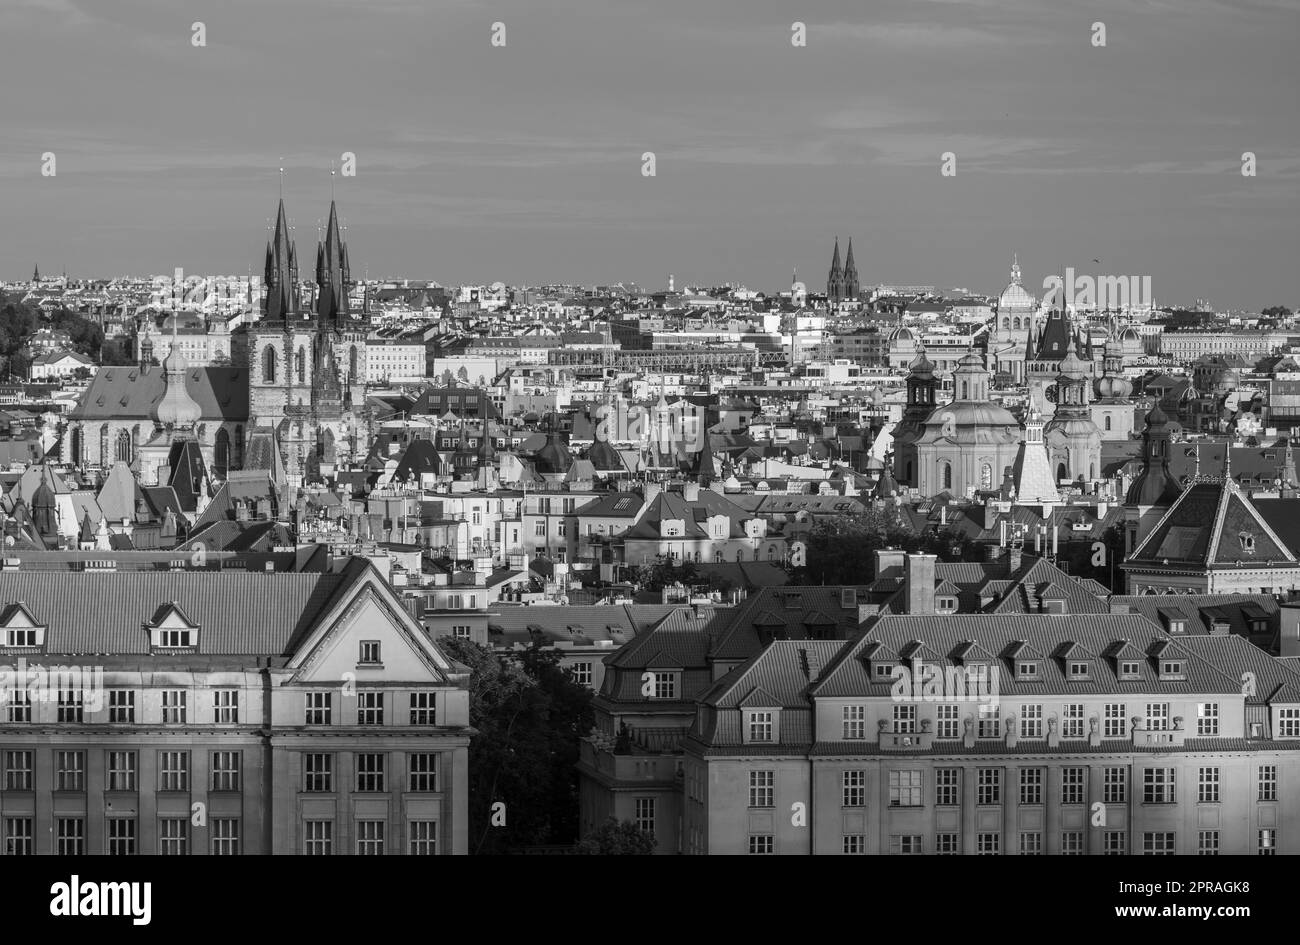 PRAGUE, CZECH REPUBLIC - Skyline of Prague with spires of Tyn Church, center left. Stock Photo